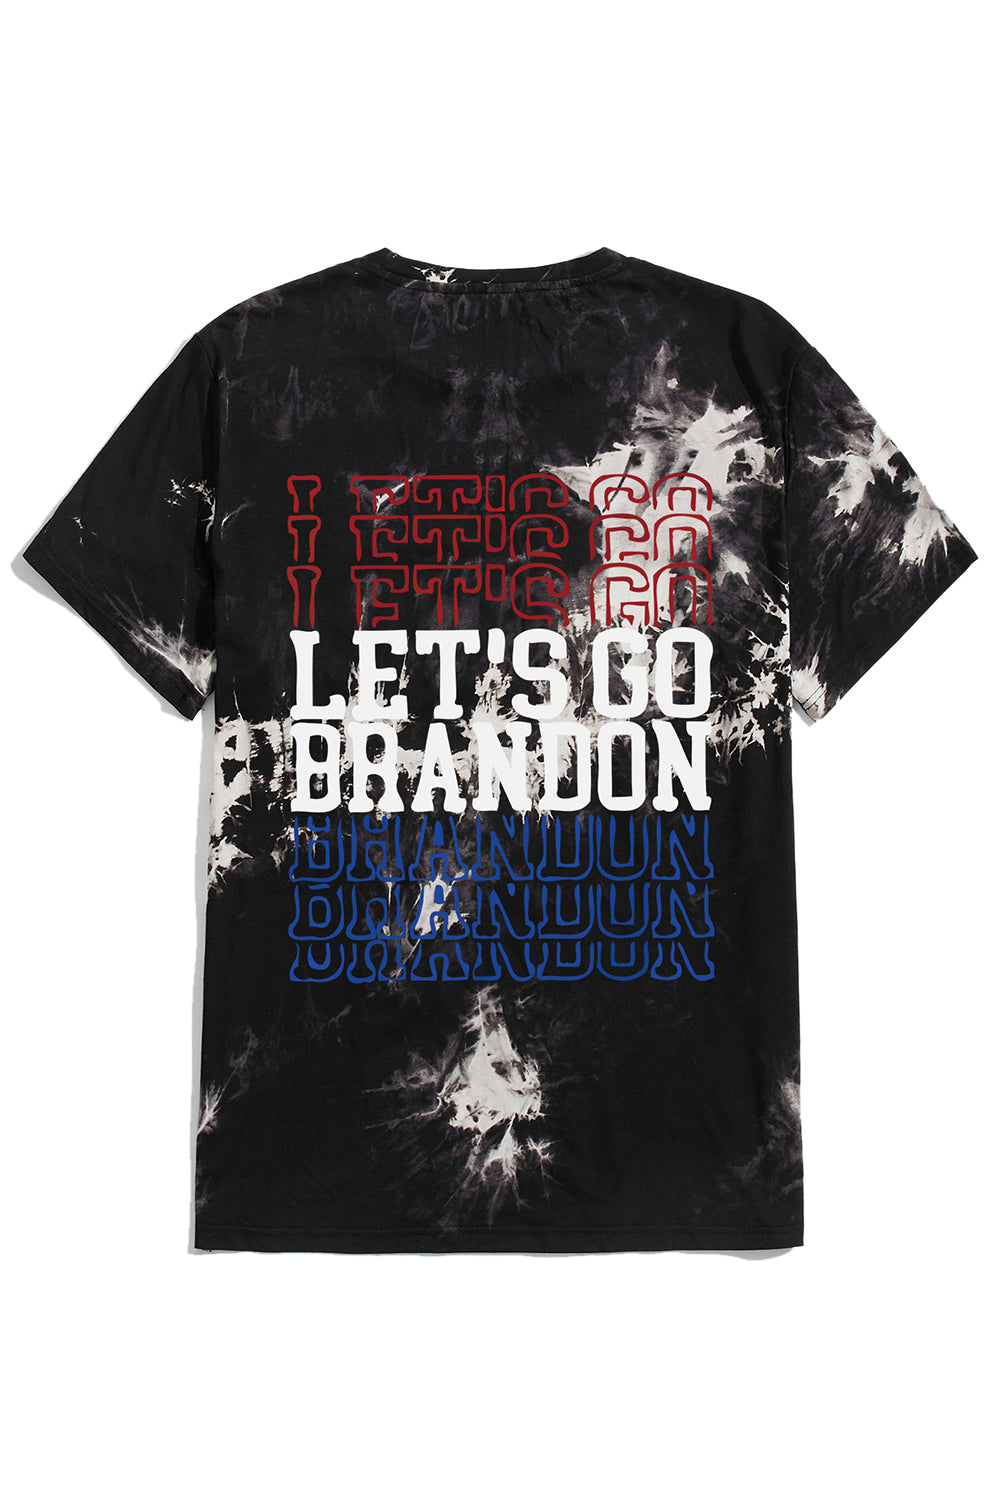 Black LET'S GO BRANDON Tie Dyed Print Men's Graphic Tee Men's Tops JT's Designer Fashion